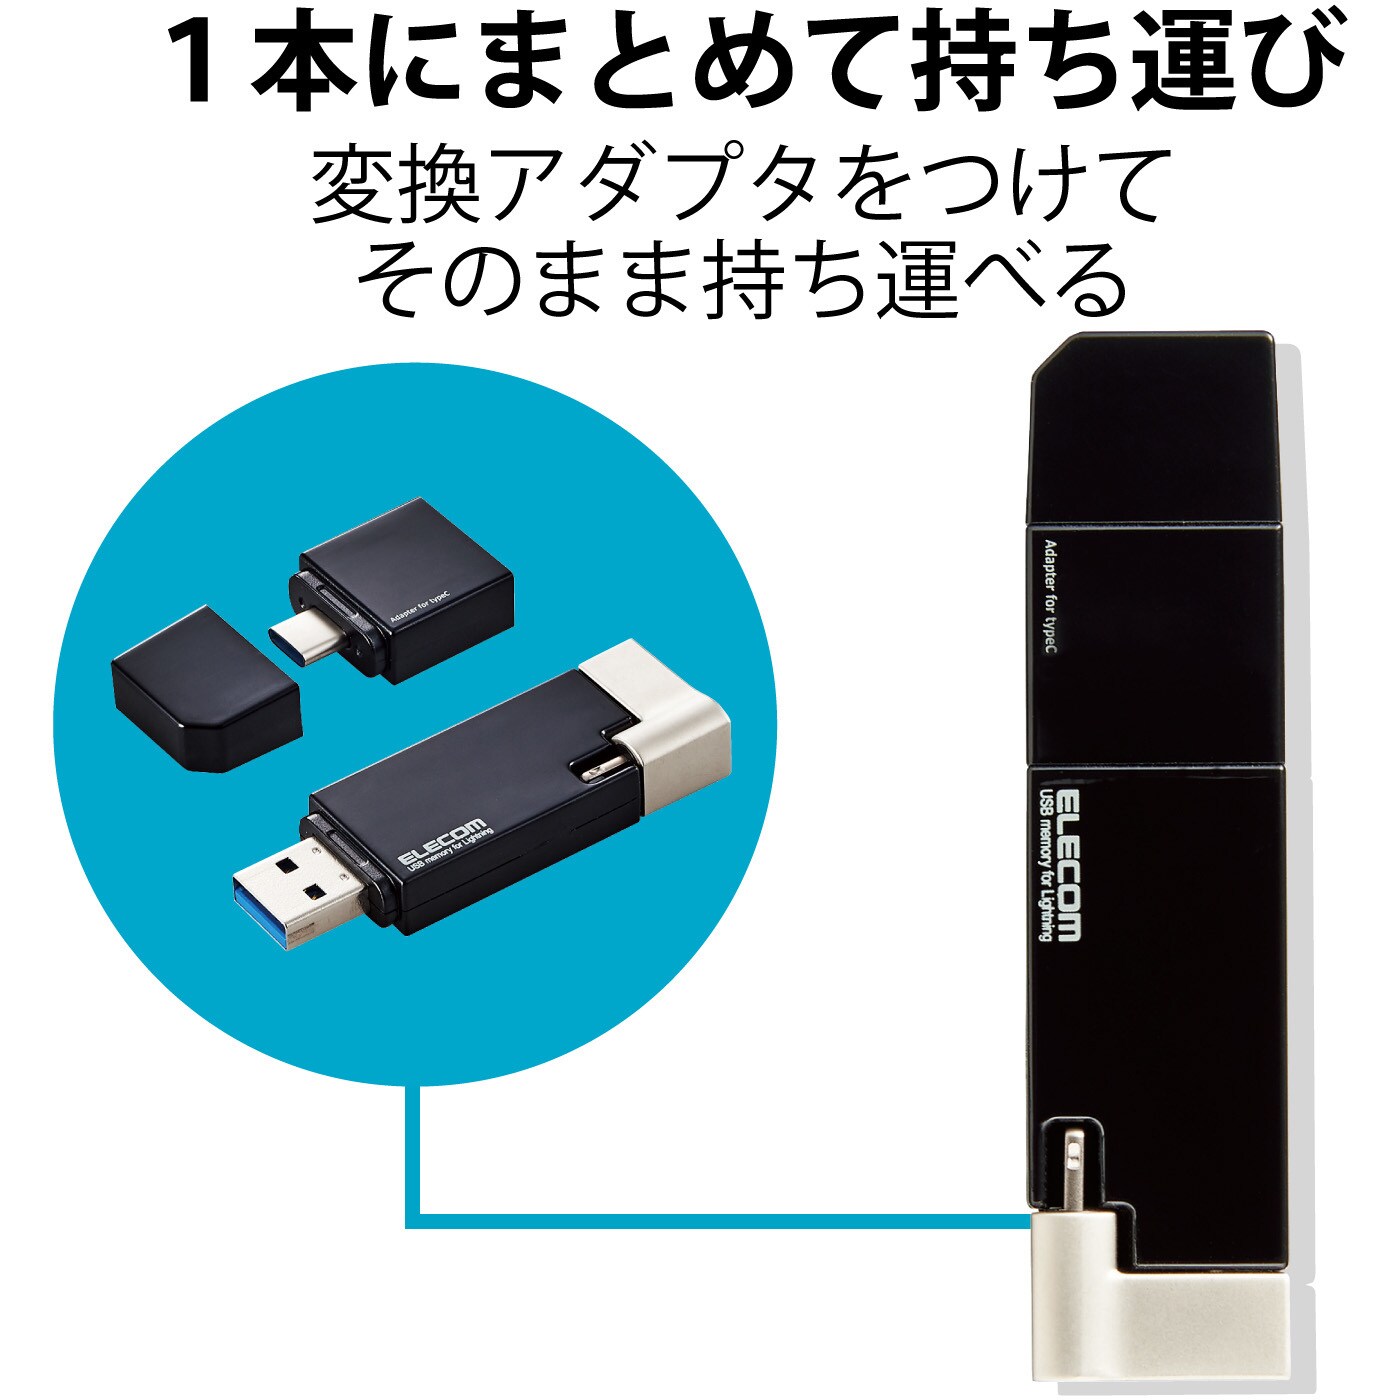 iPhone iPad USBメモリ Apple MFI認証 Lightning USB3.2(Gen1) USB3.0対応 Type-C変換アダプタ付